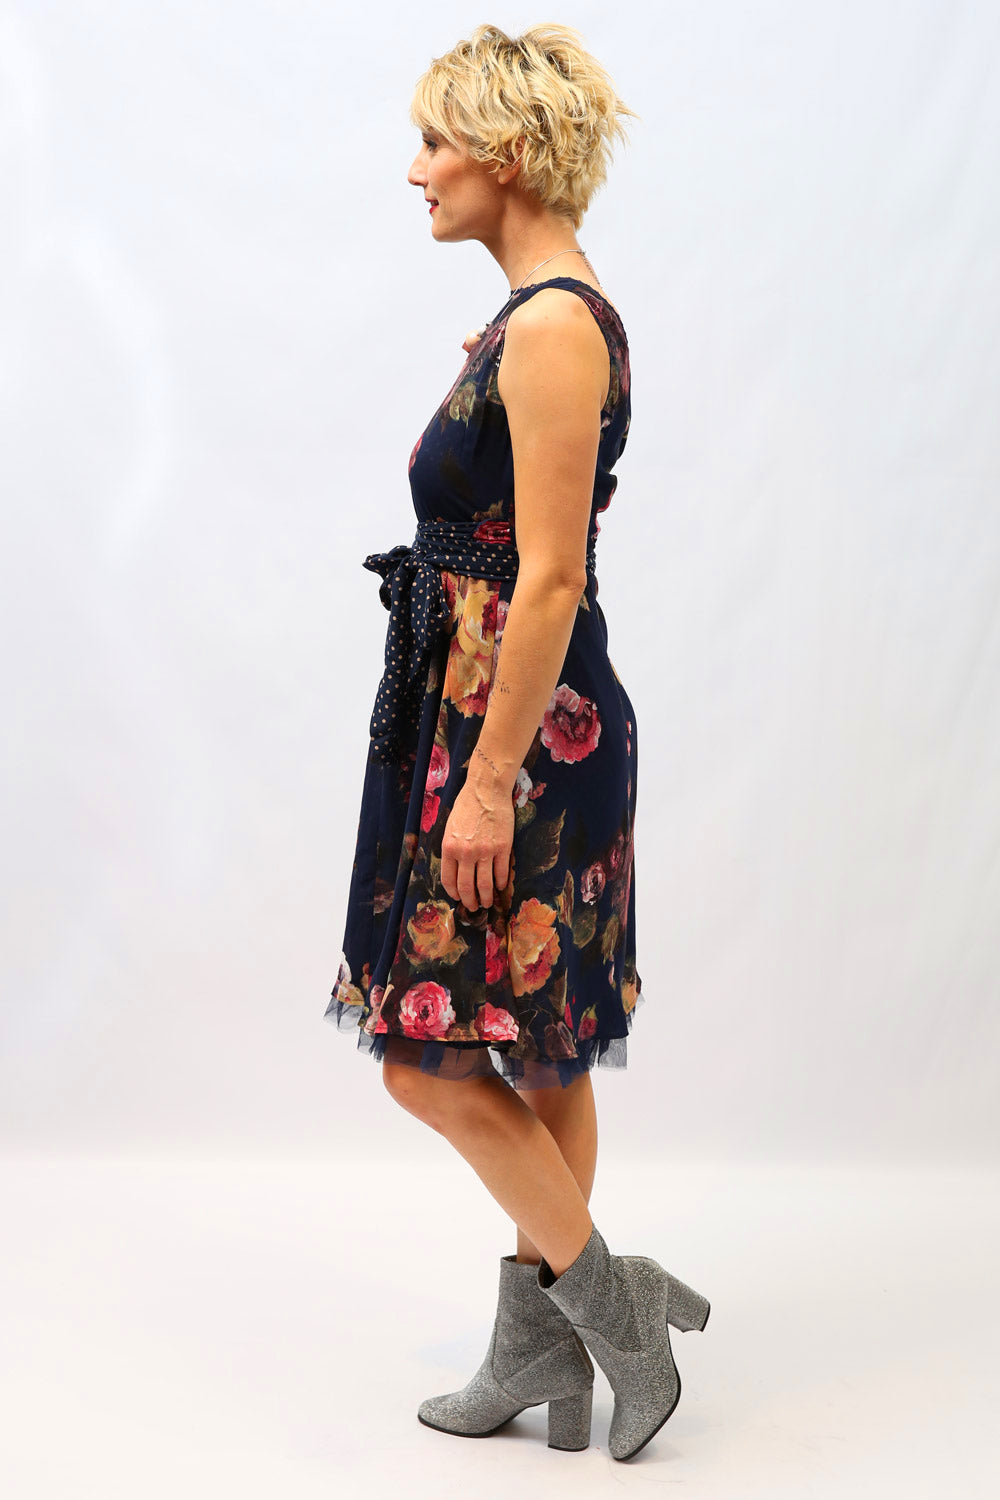 Abigail FlipIt | Wrap Dress | Addicted to Life | New Zealand Designer | New Zealand Fashion | Annah Strettonabigail flip it dress in navy with blush florals wrap dress